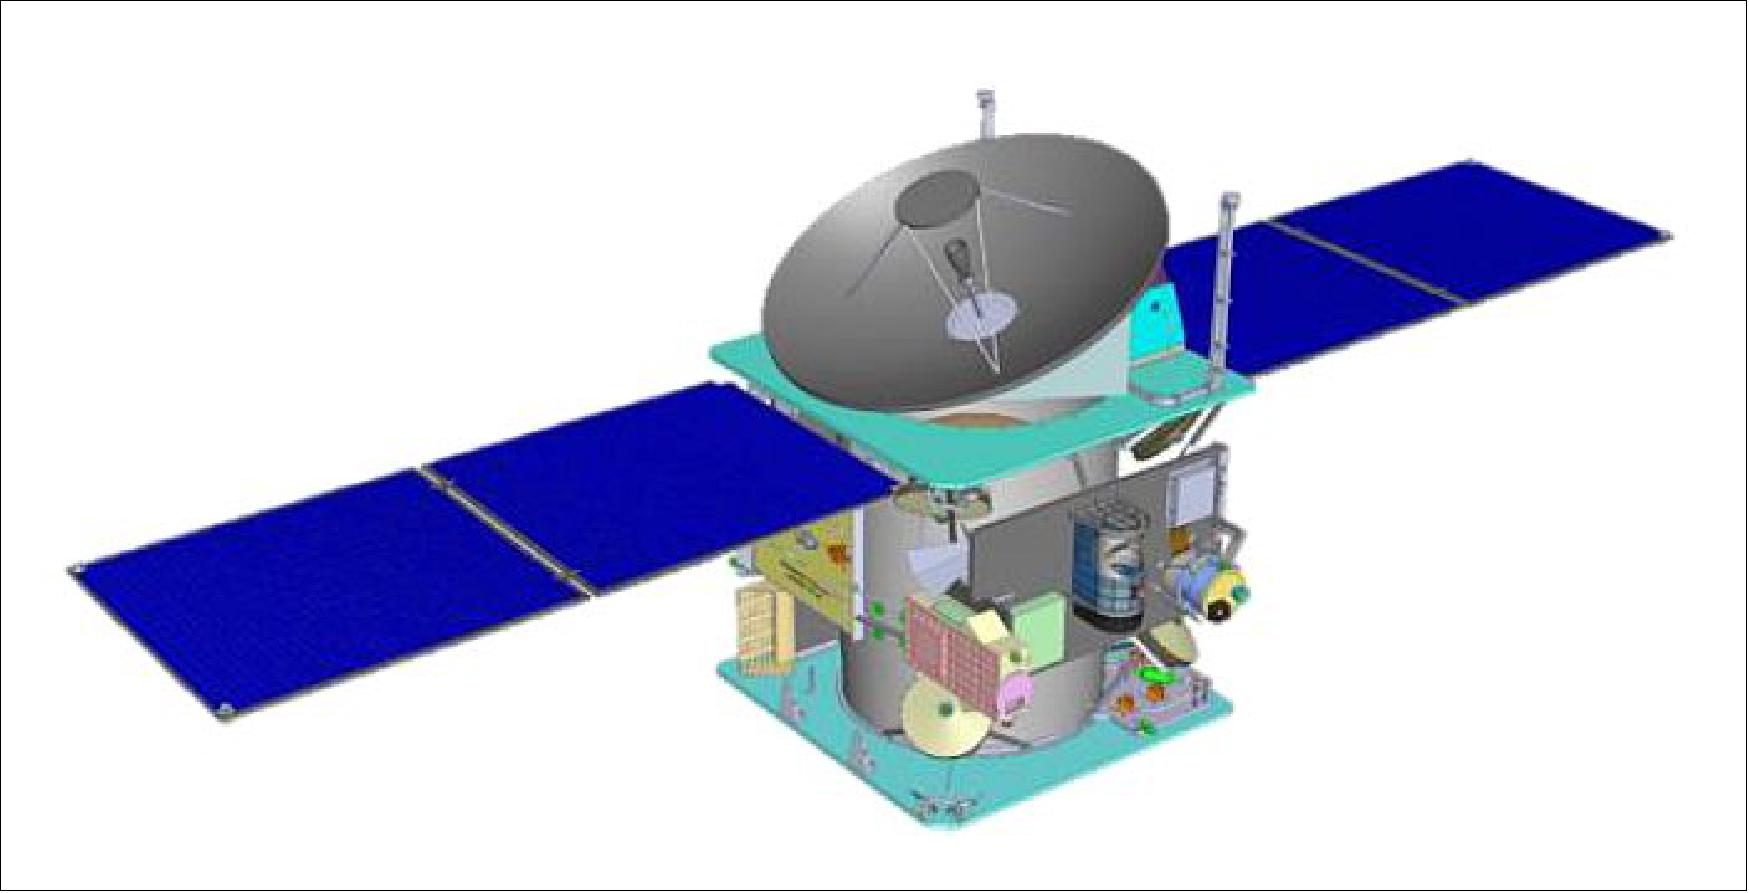 Figure 2: Illustration of the deployed Hope spacecraft (image credit: MBRSC)